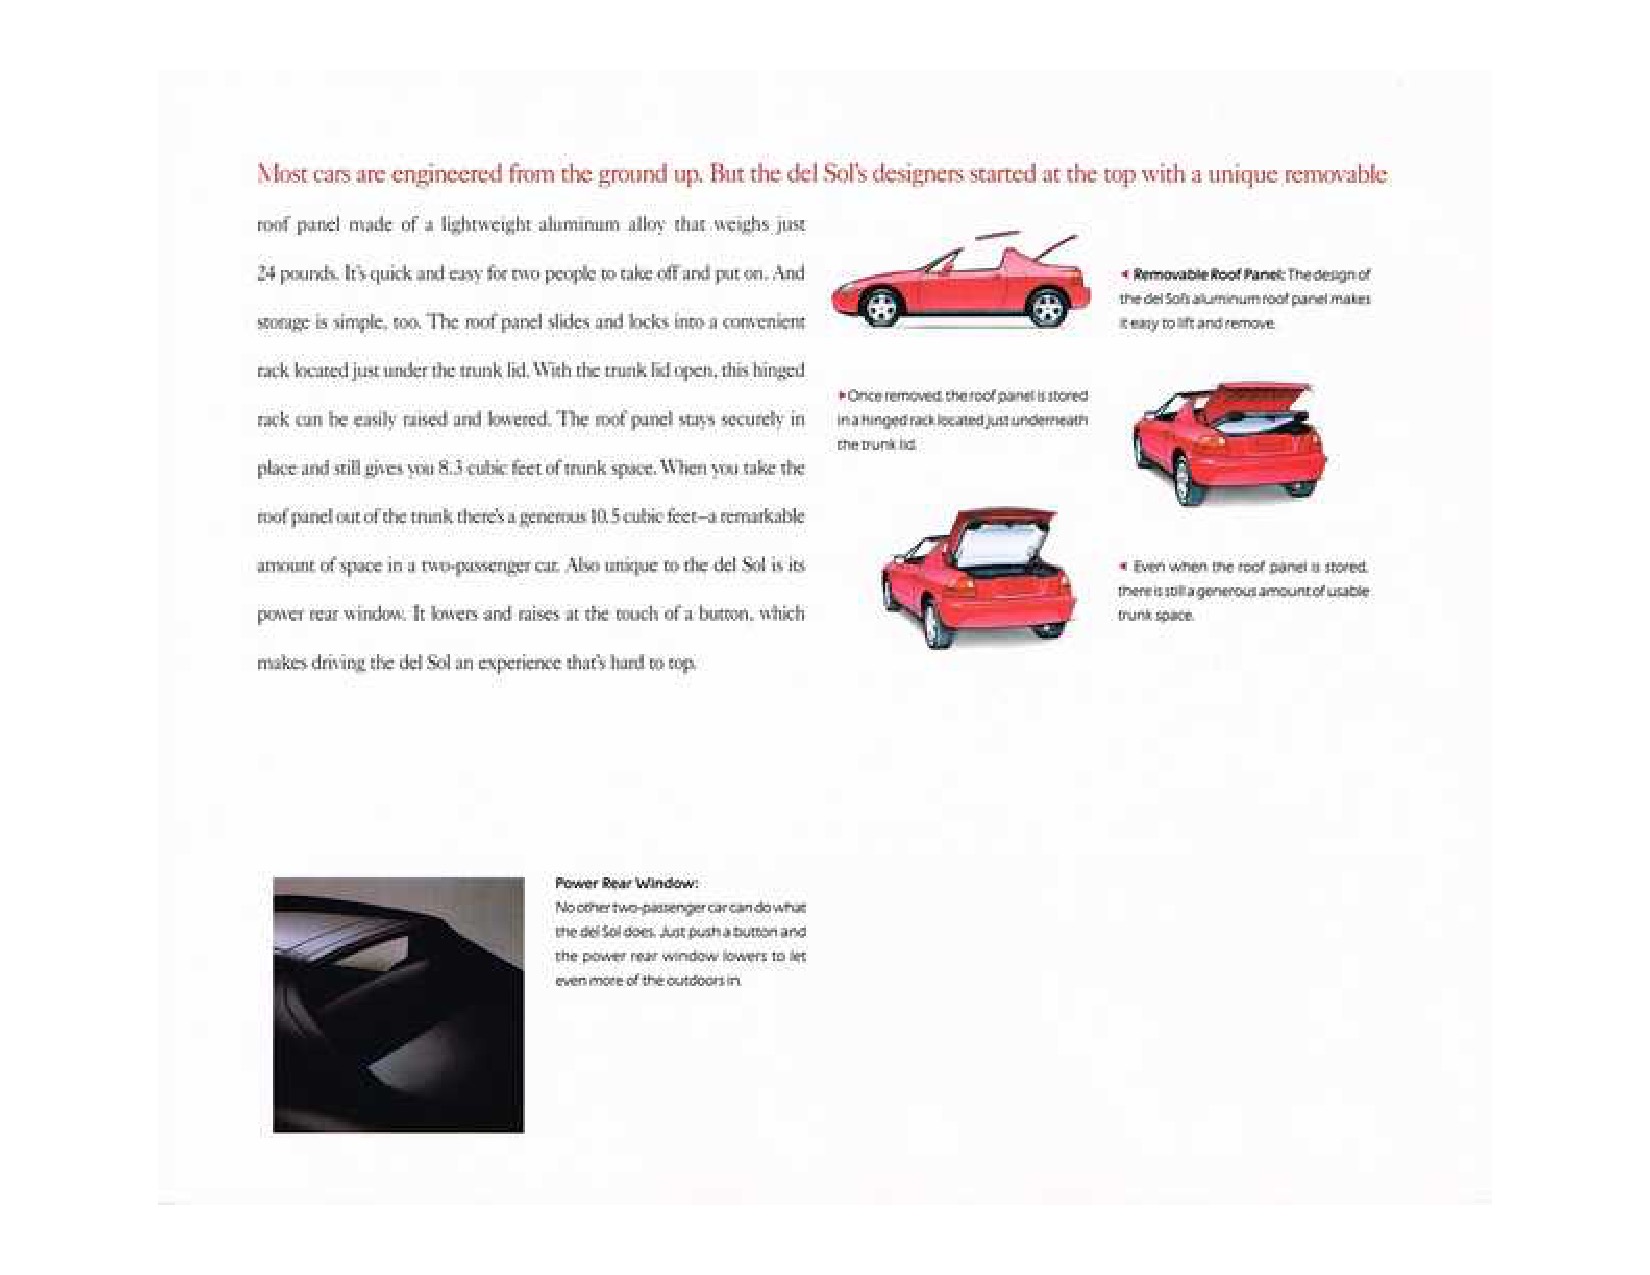 1993 Honda Civic delSol Brochure Page 11